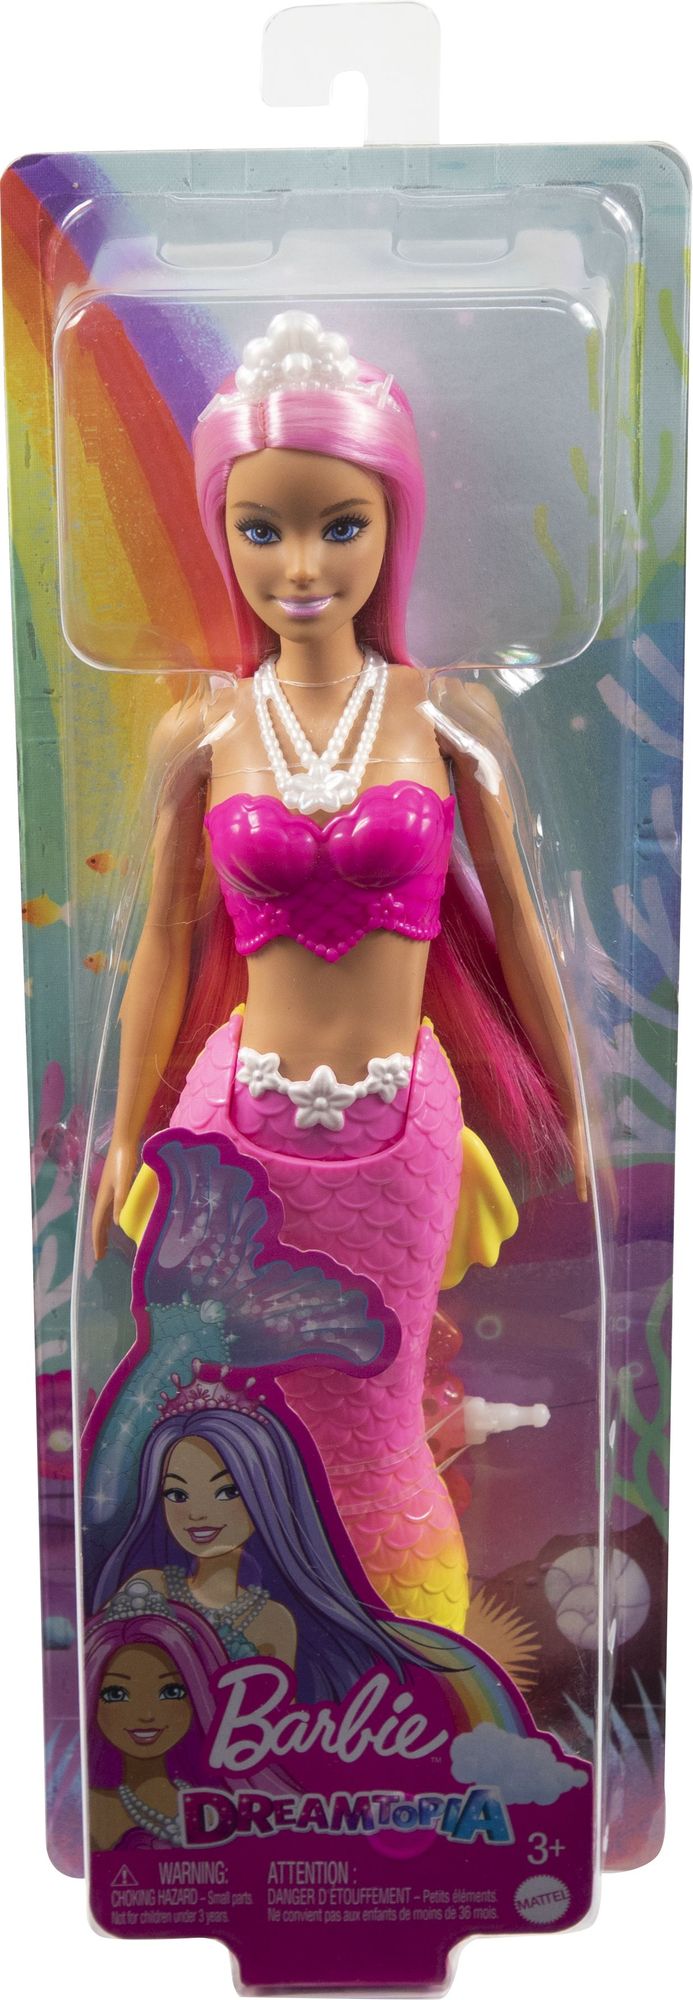 Meerjungfrau-Puppe\' Barbie Barbie kaufen Dreamtopia - Spielwaren -